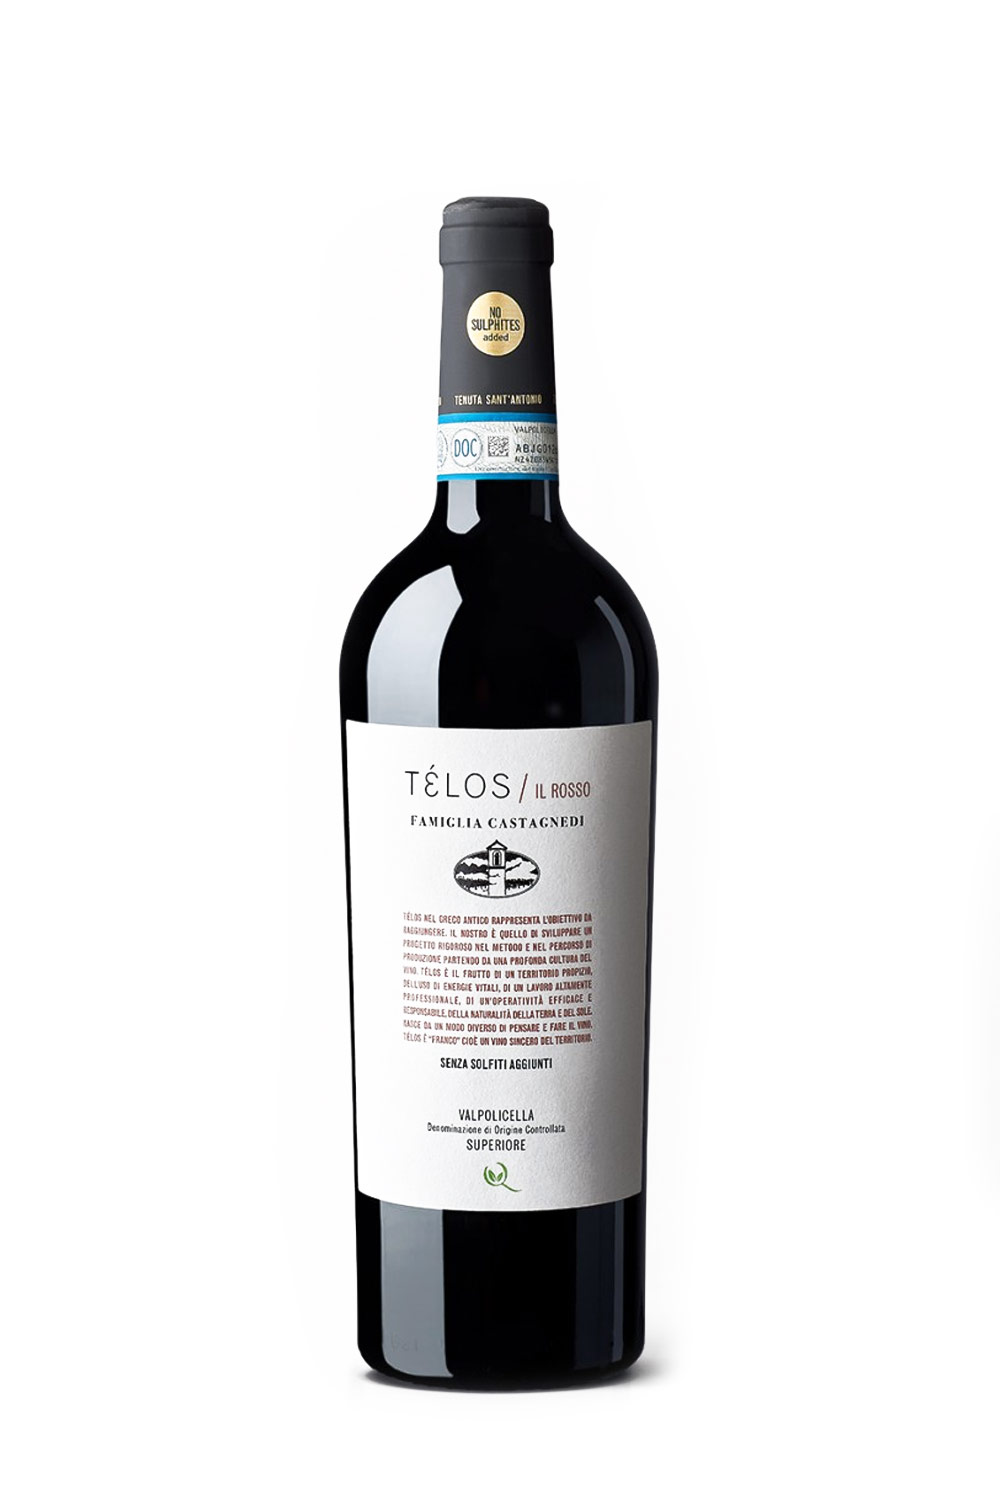 Tenuta Sant Antonio Online DOC superiore 2018 Vini Valpolicella Télos kaufen | - Rosso Italien Il bei Senti Weine aus